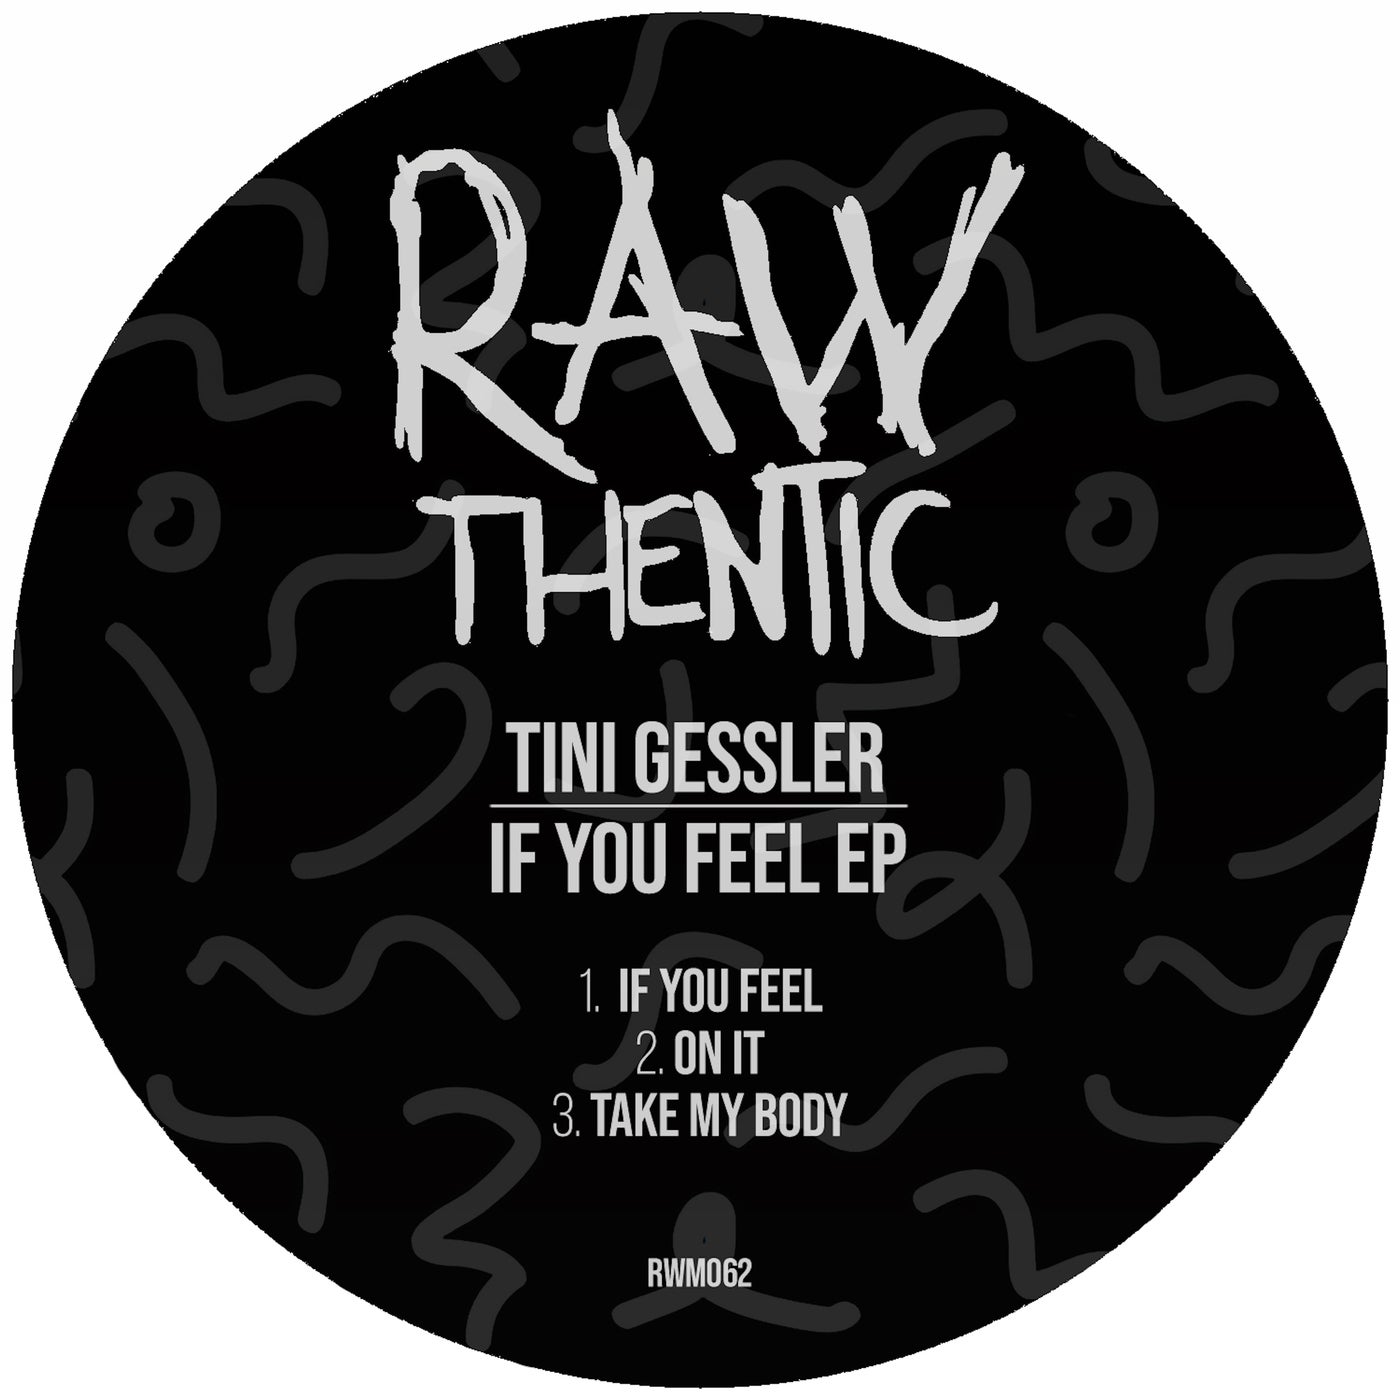 Tini Gessler – If You Feel EP [RWM062]